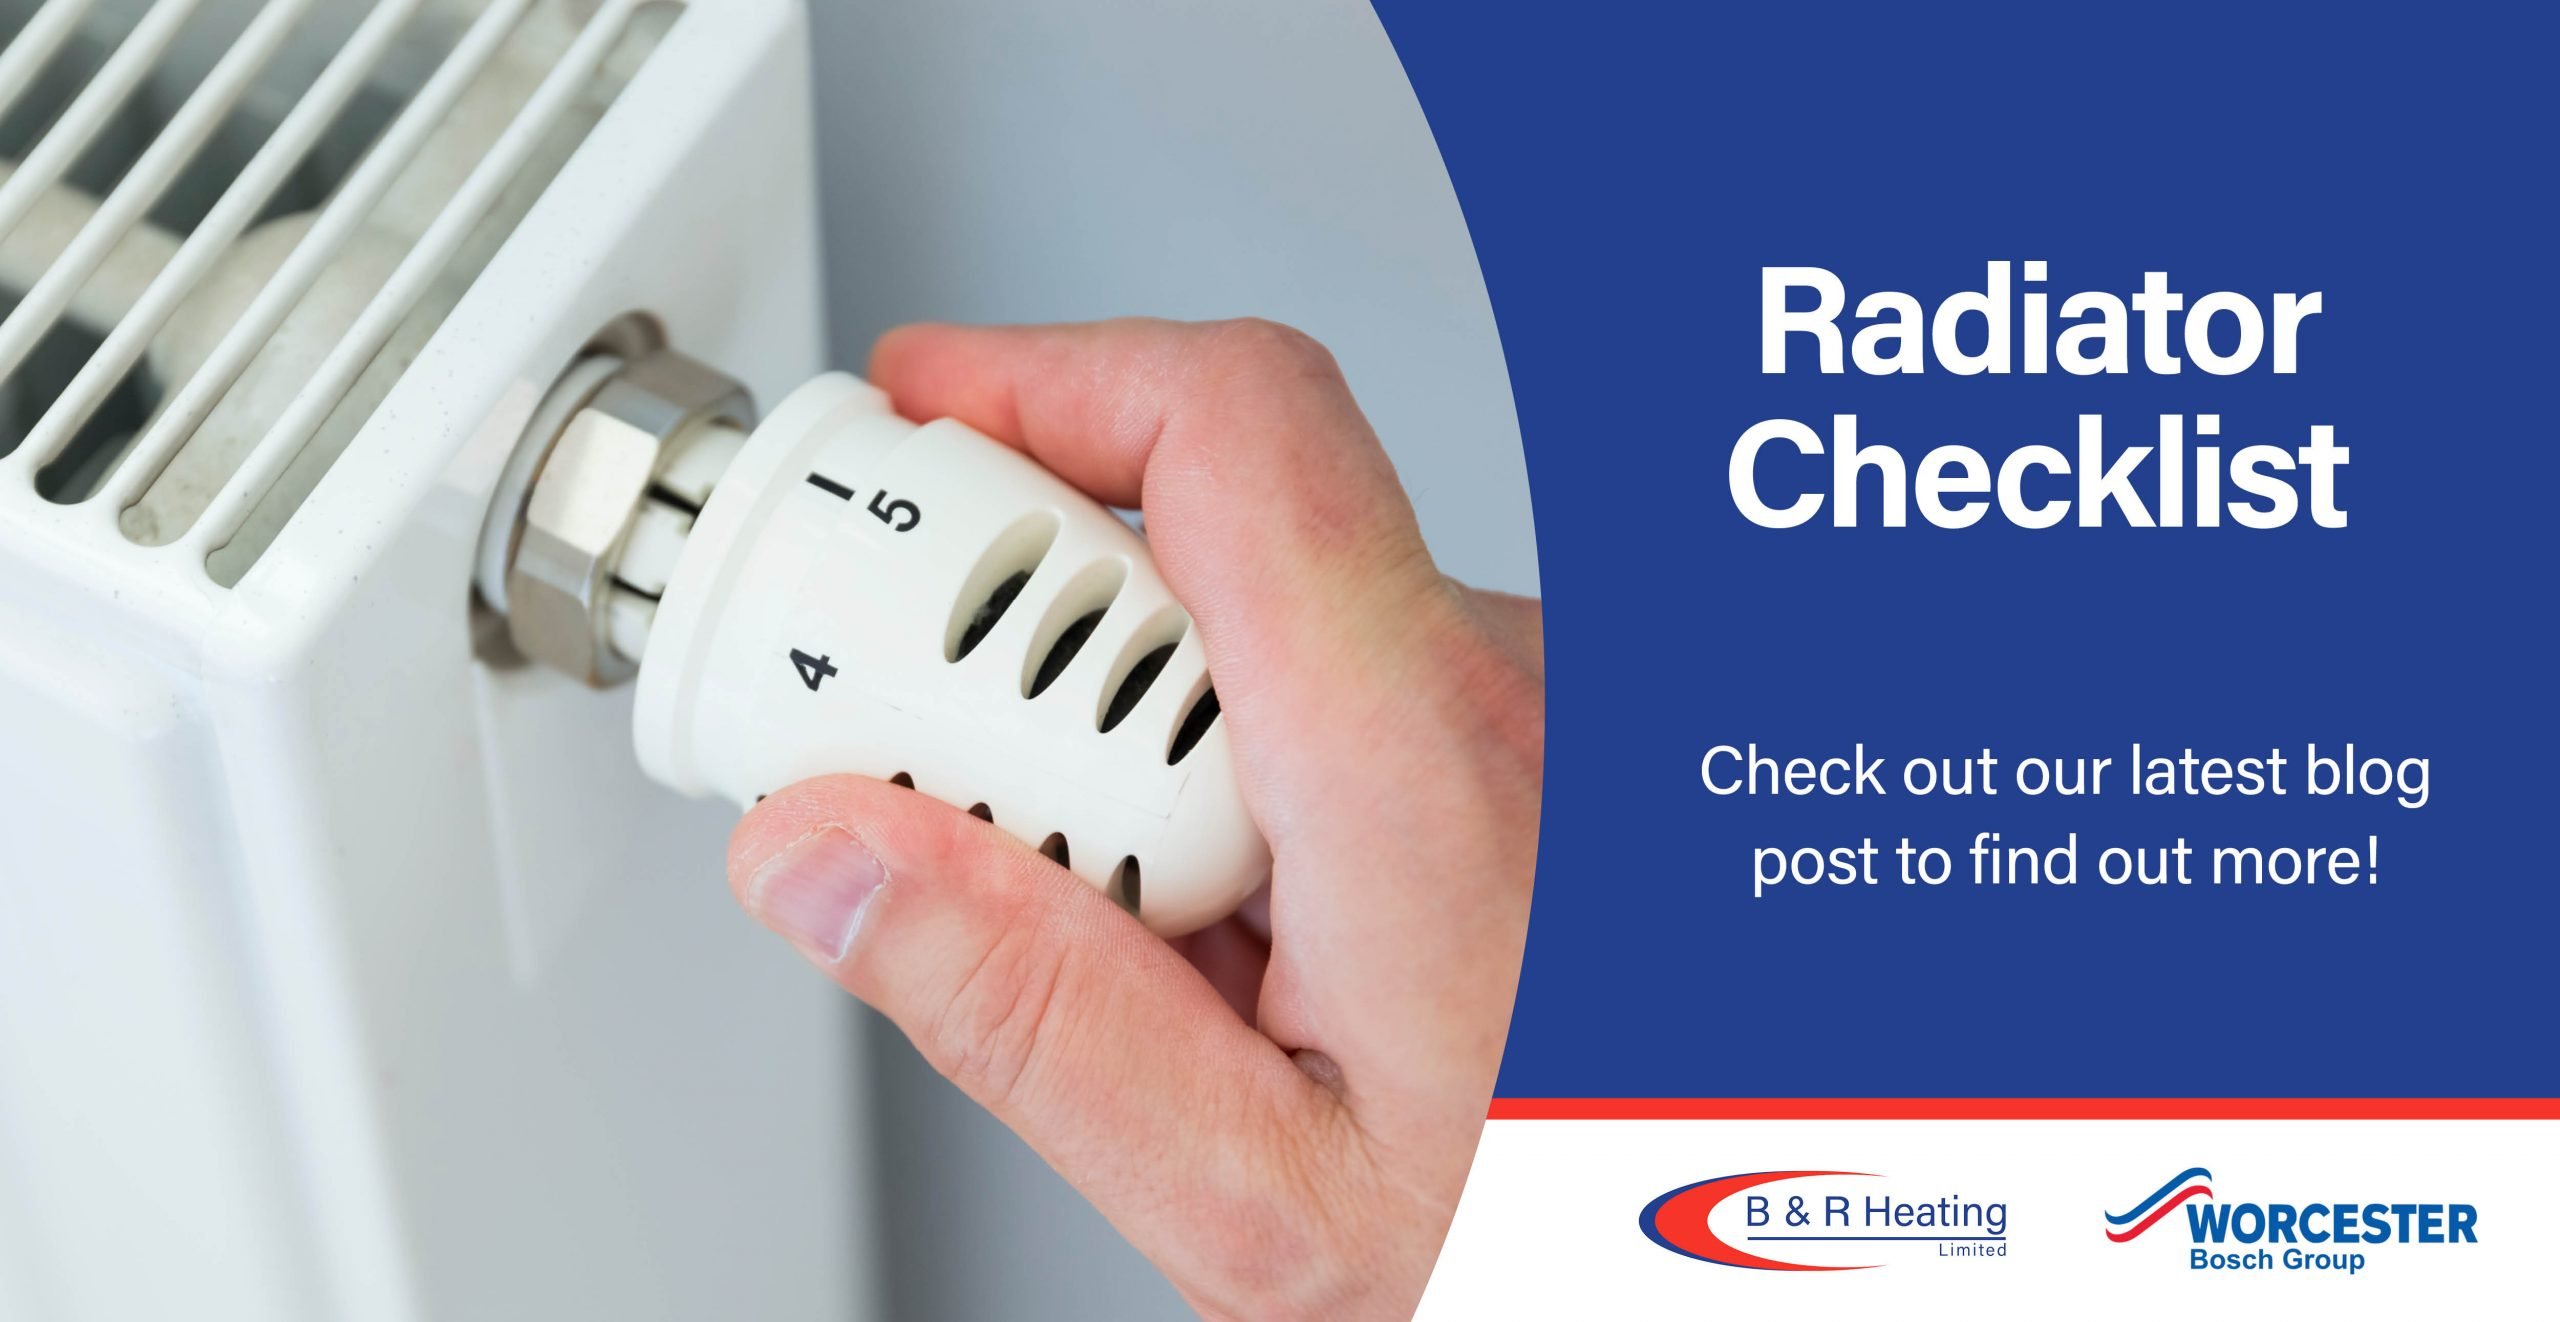 Radiator Checklist blog post by B&R Heating Ltd